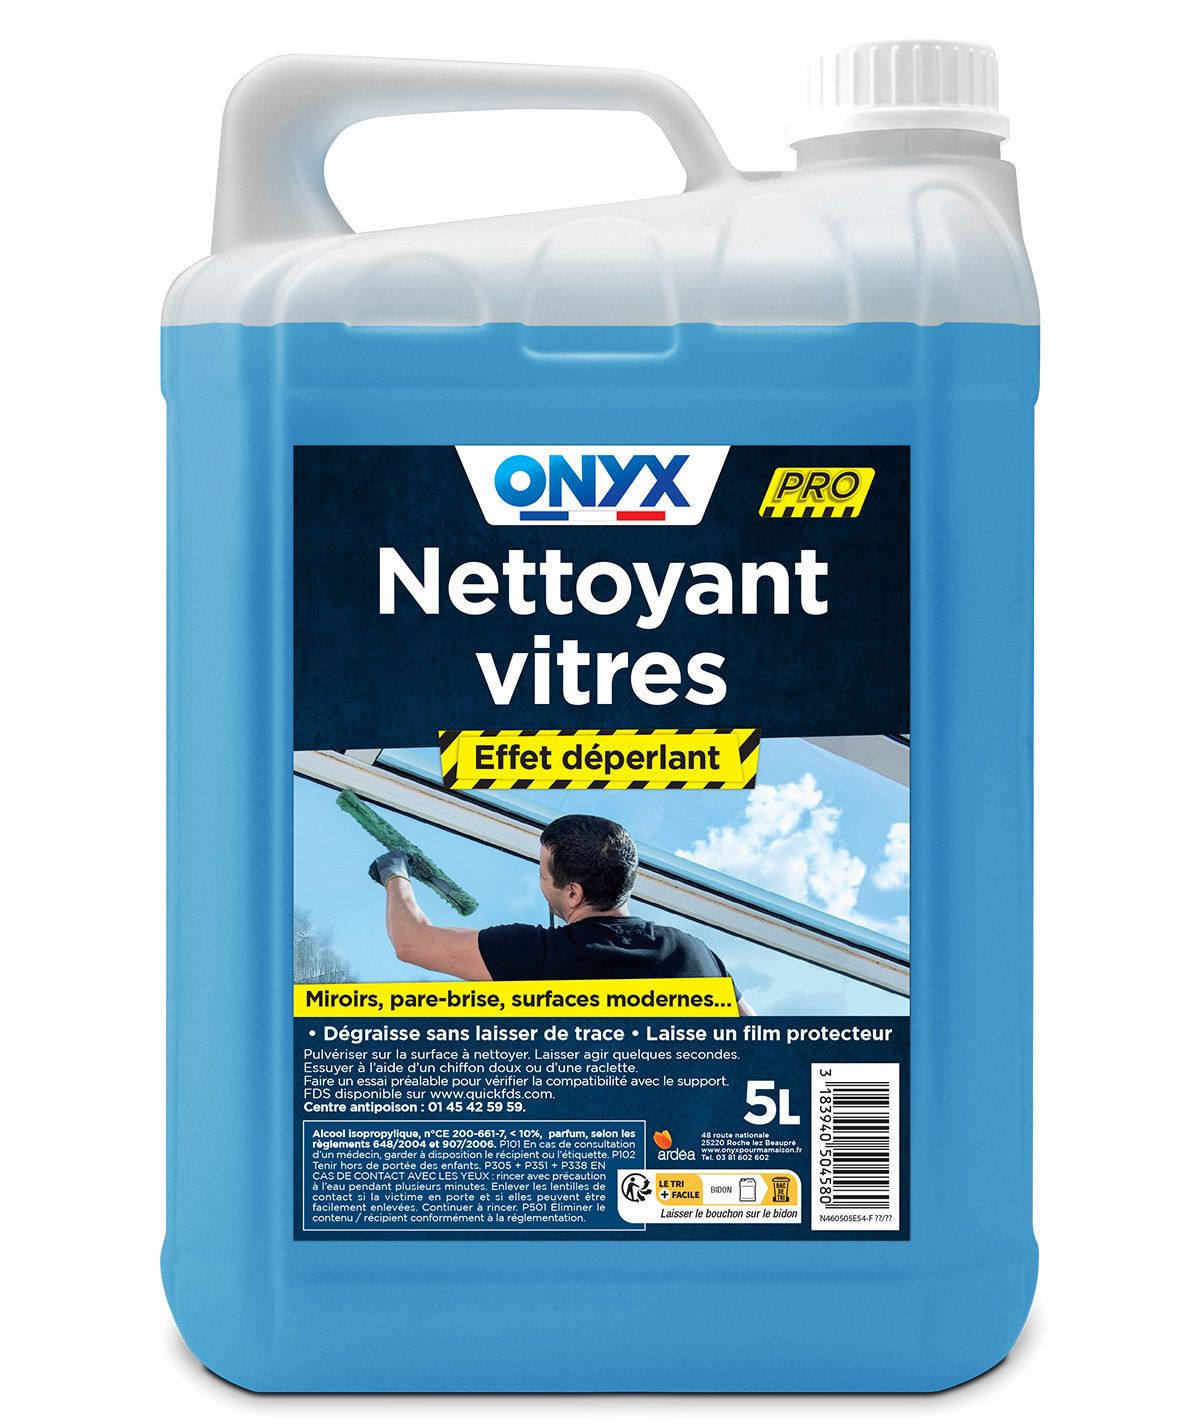 Nettoyant Vitres et surfaces - ORLAV - 750mL - Vitres - Produits